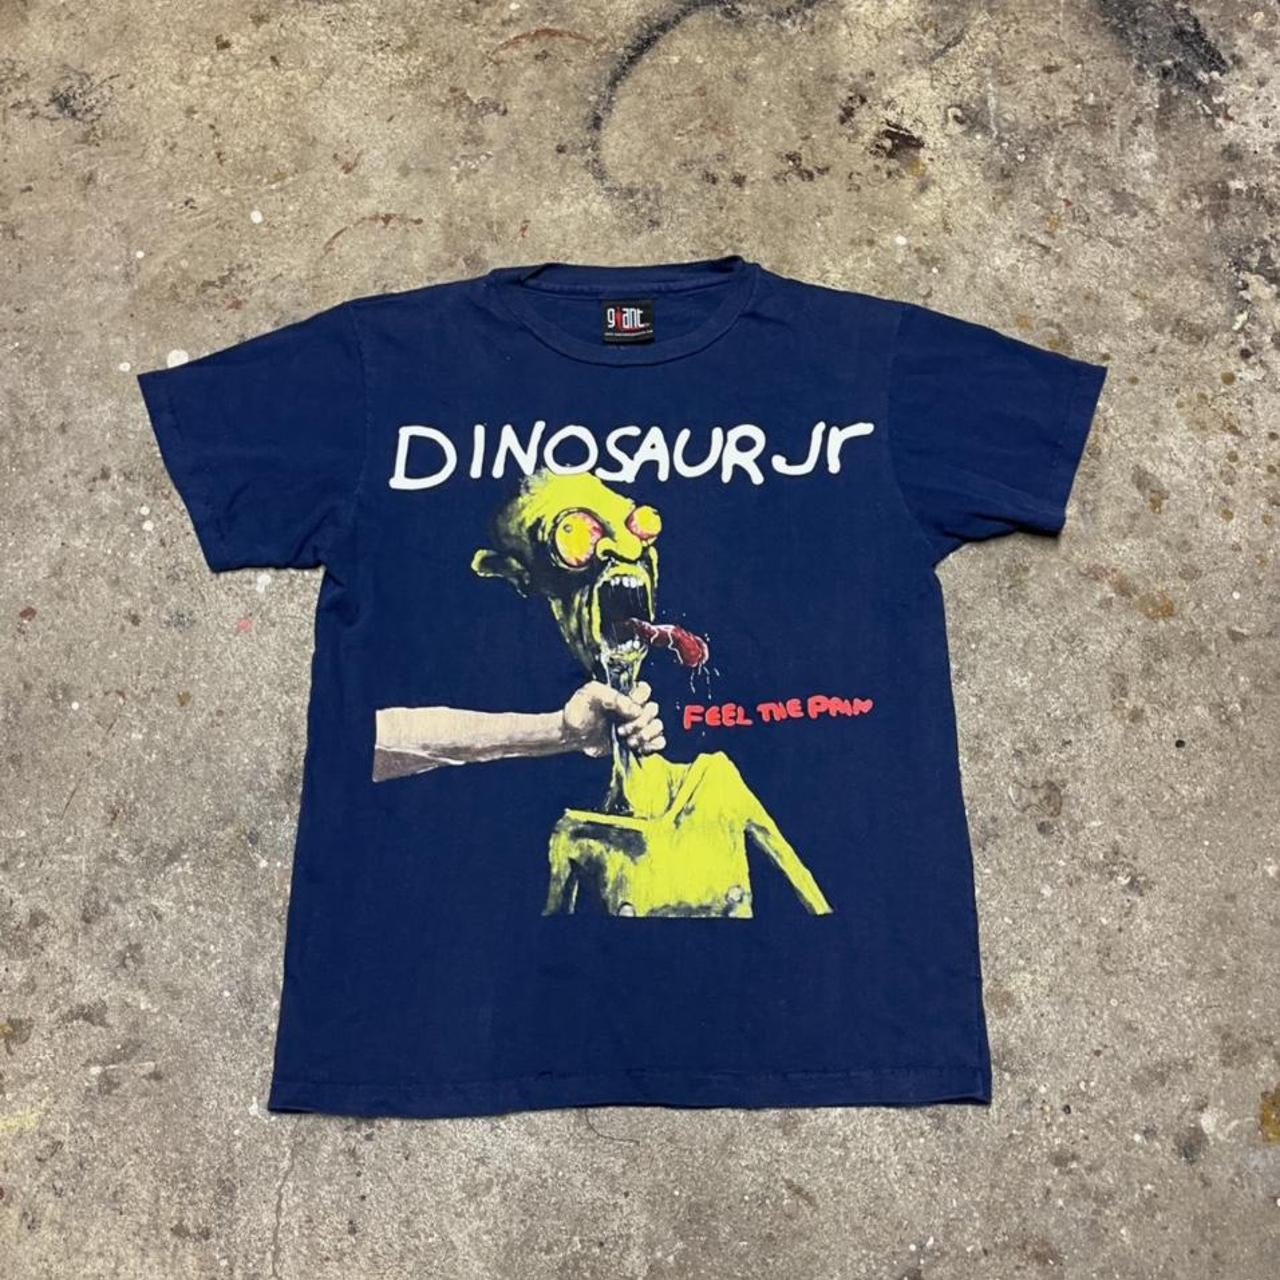 Vintage 1995 Dinosaur Jr. Feel the pain Tour T-Shirt